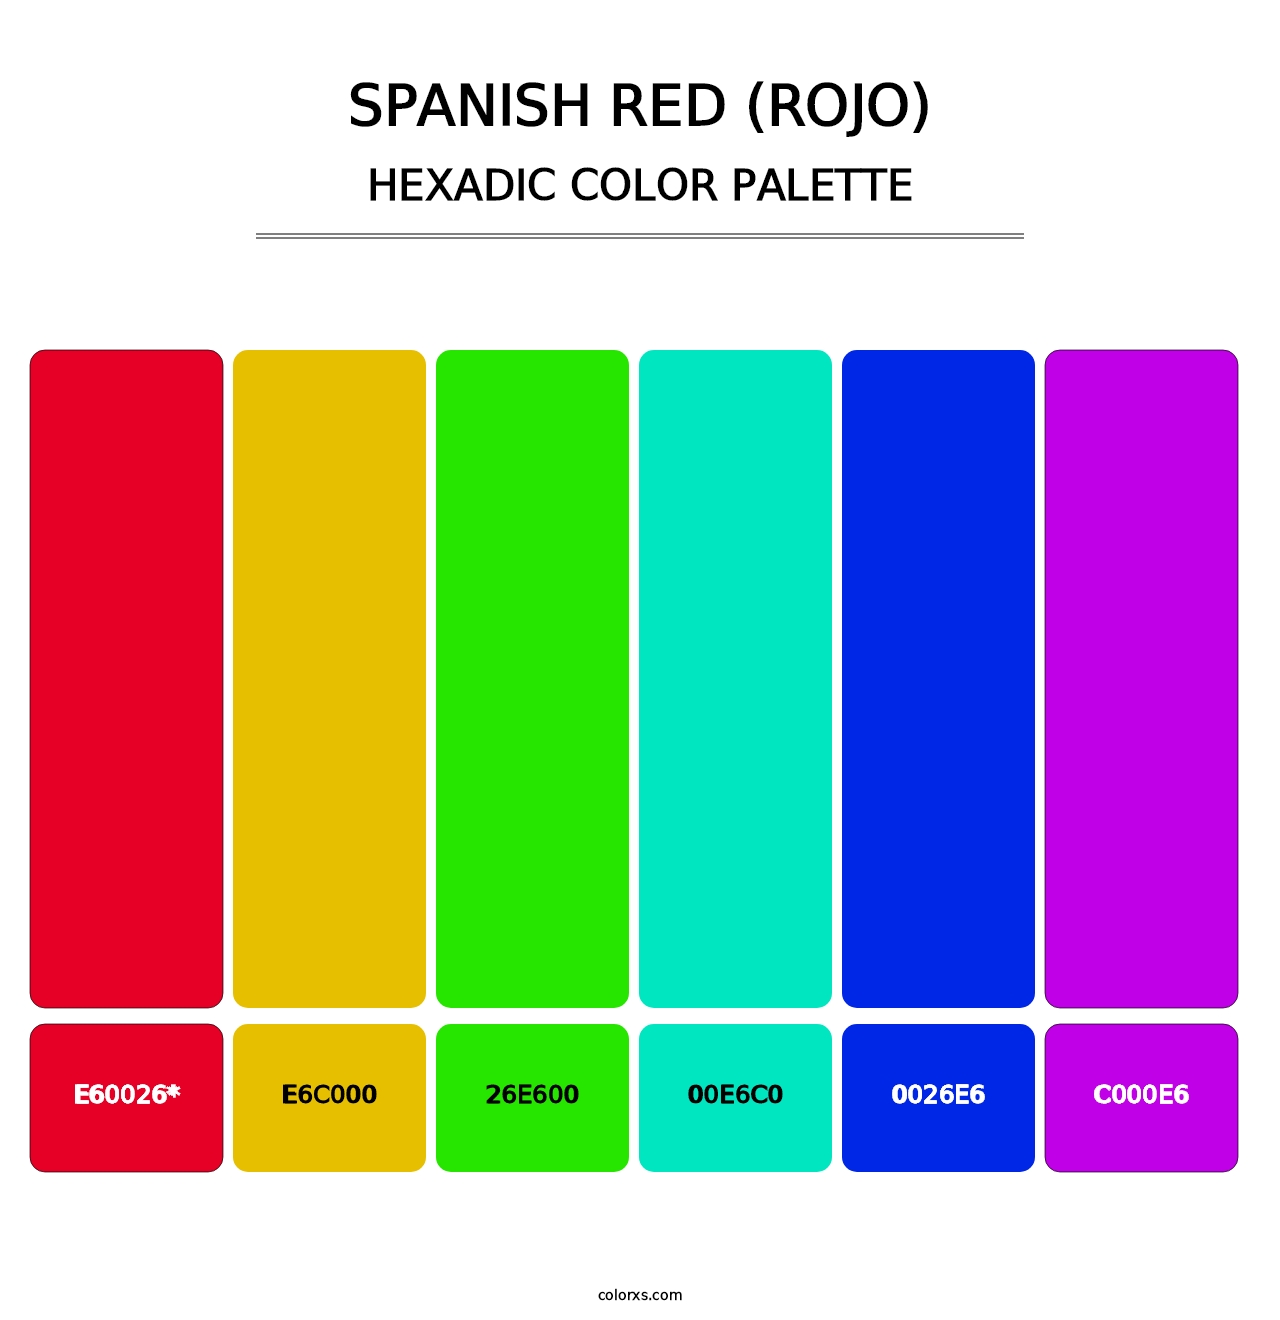 Spanish Red (Rojo) - Hexadic Color Palette